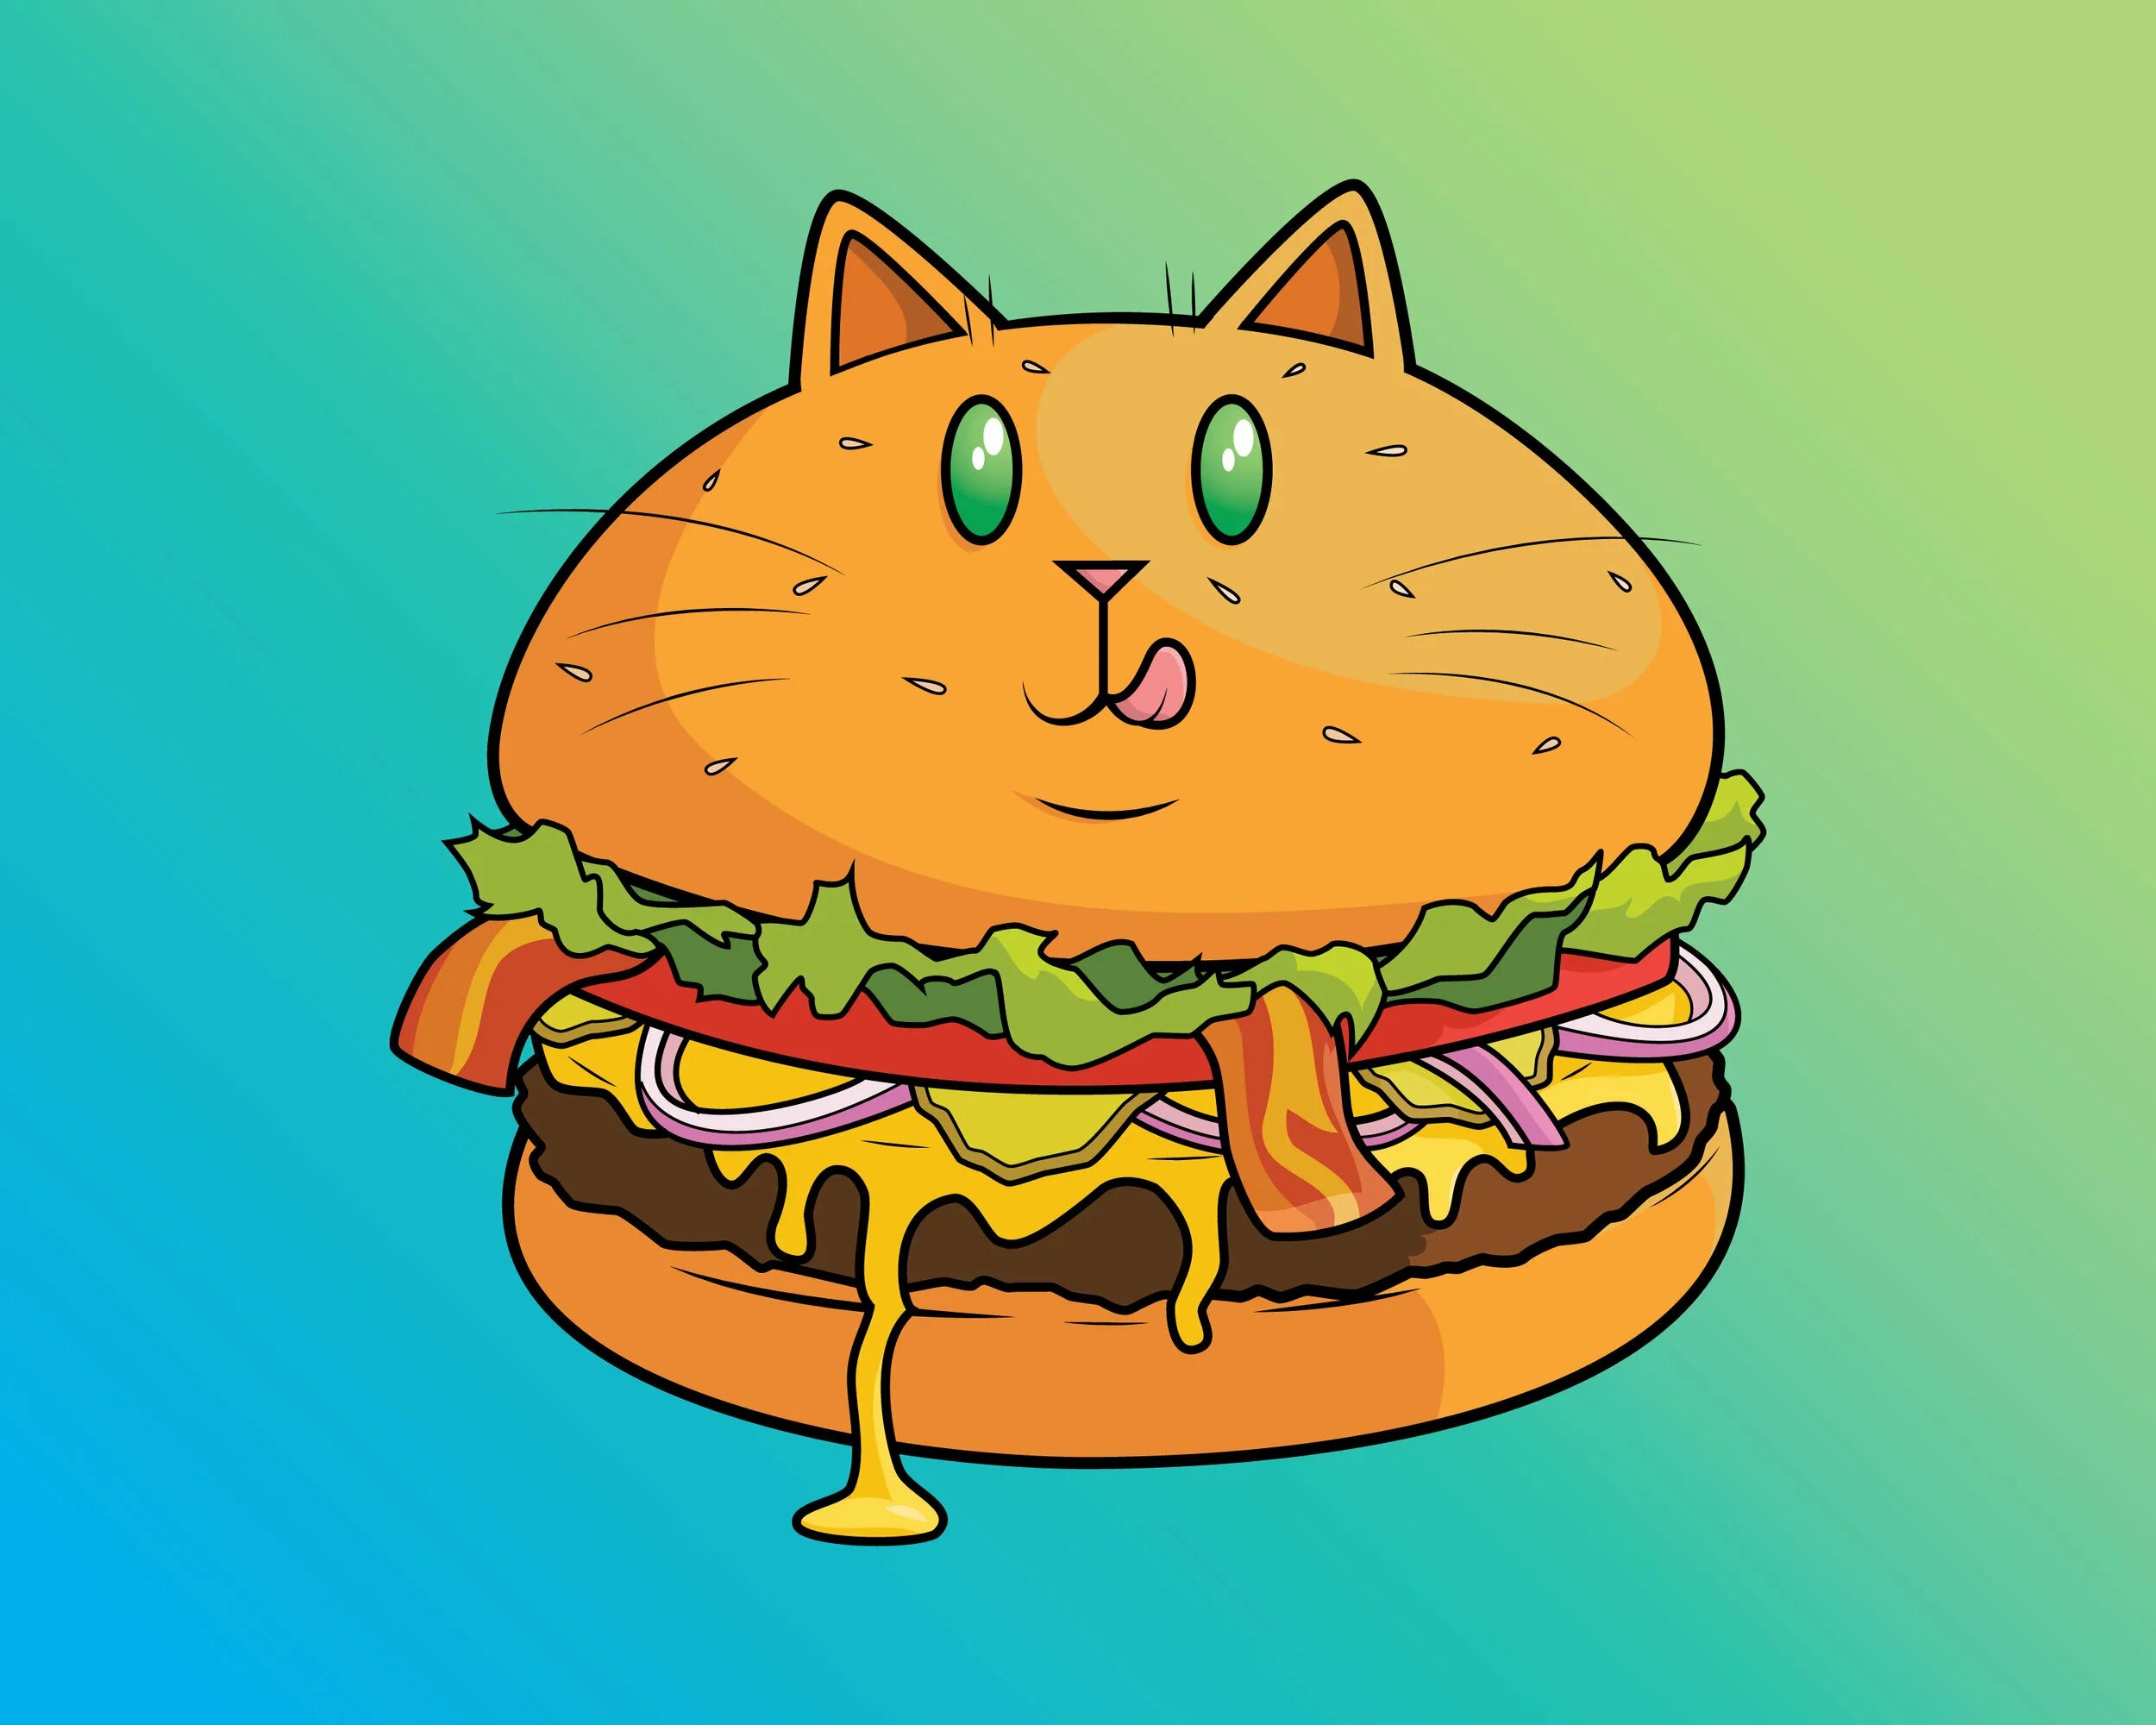 Burger cat #3